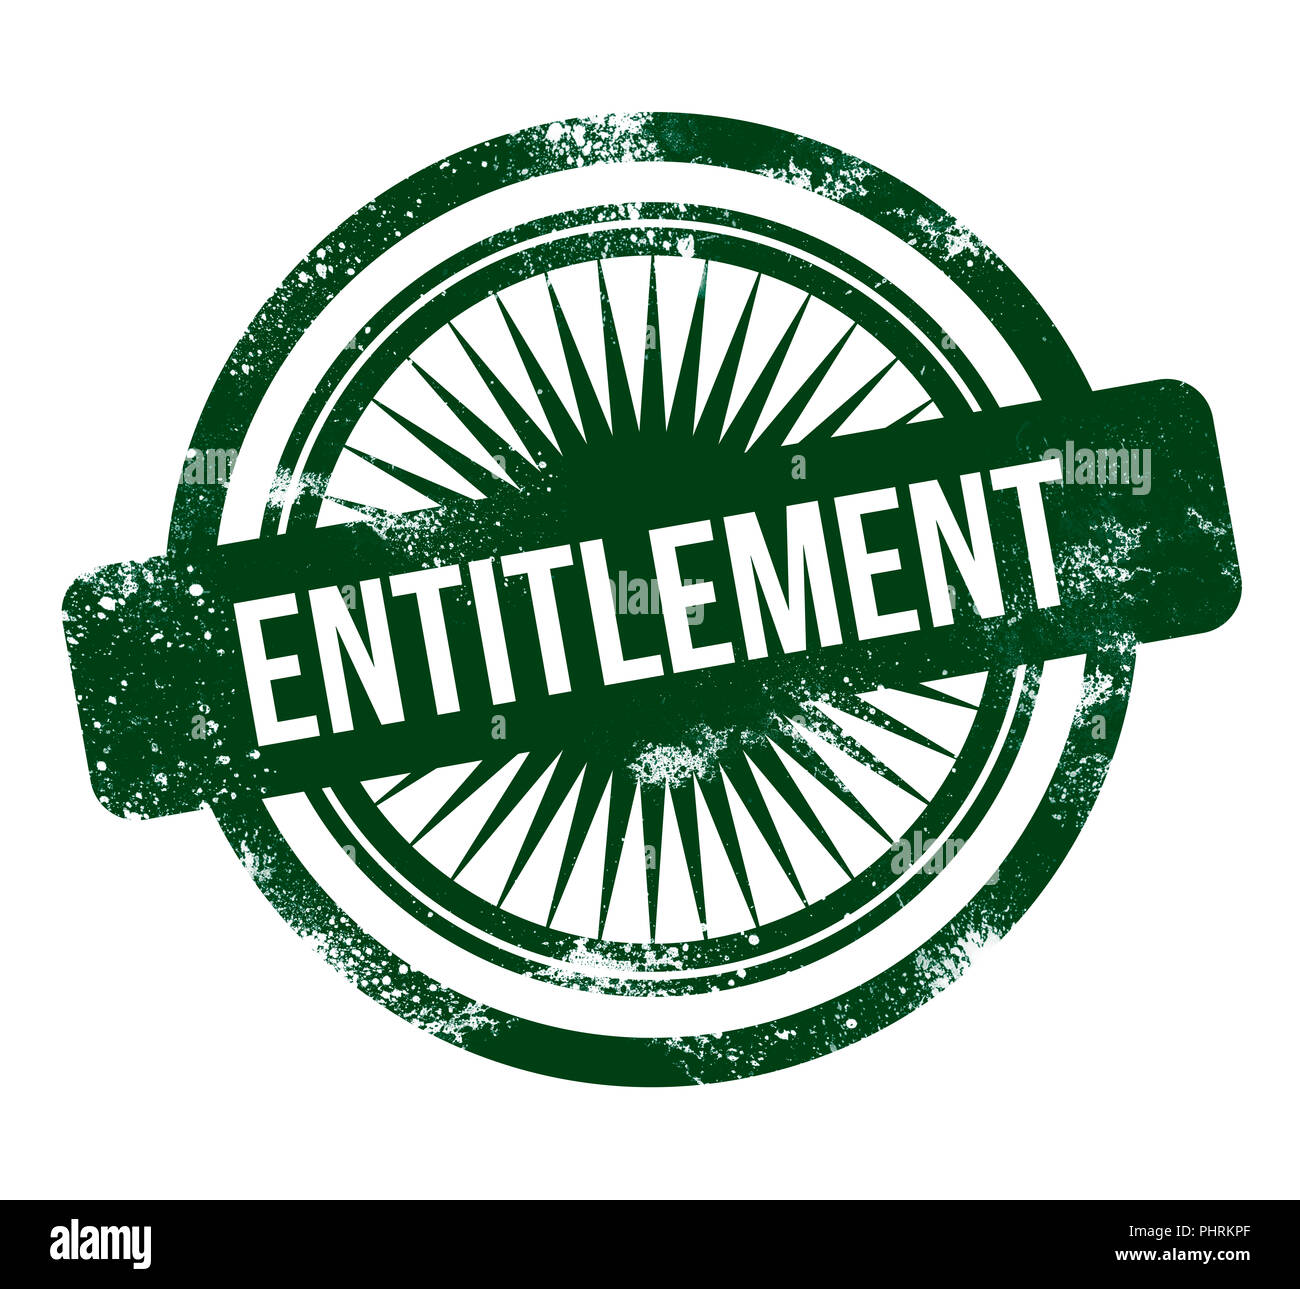 Entitlement - green grunge stamp Stock Photo